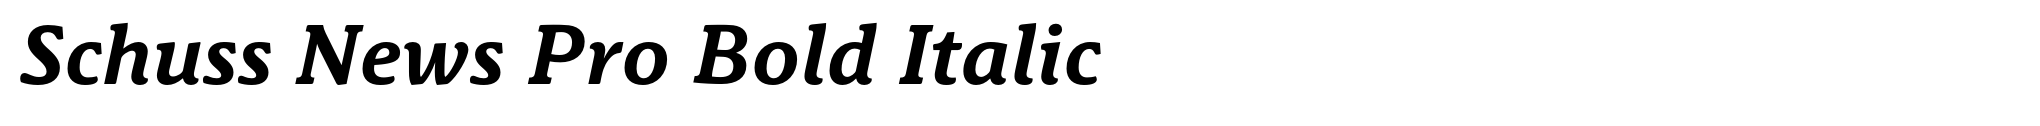 Schuss News Pro Bold Italic image